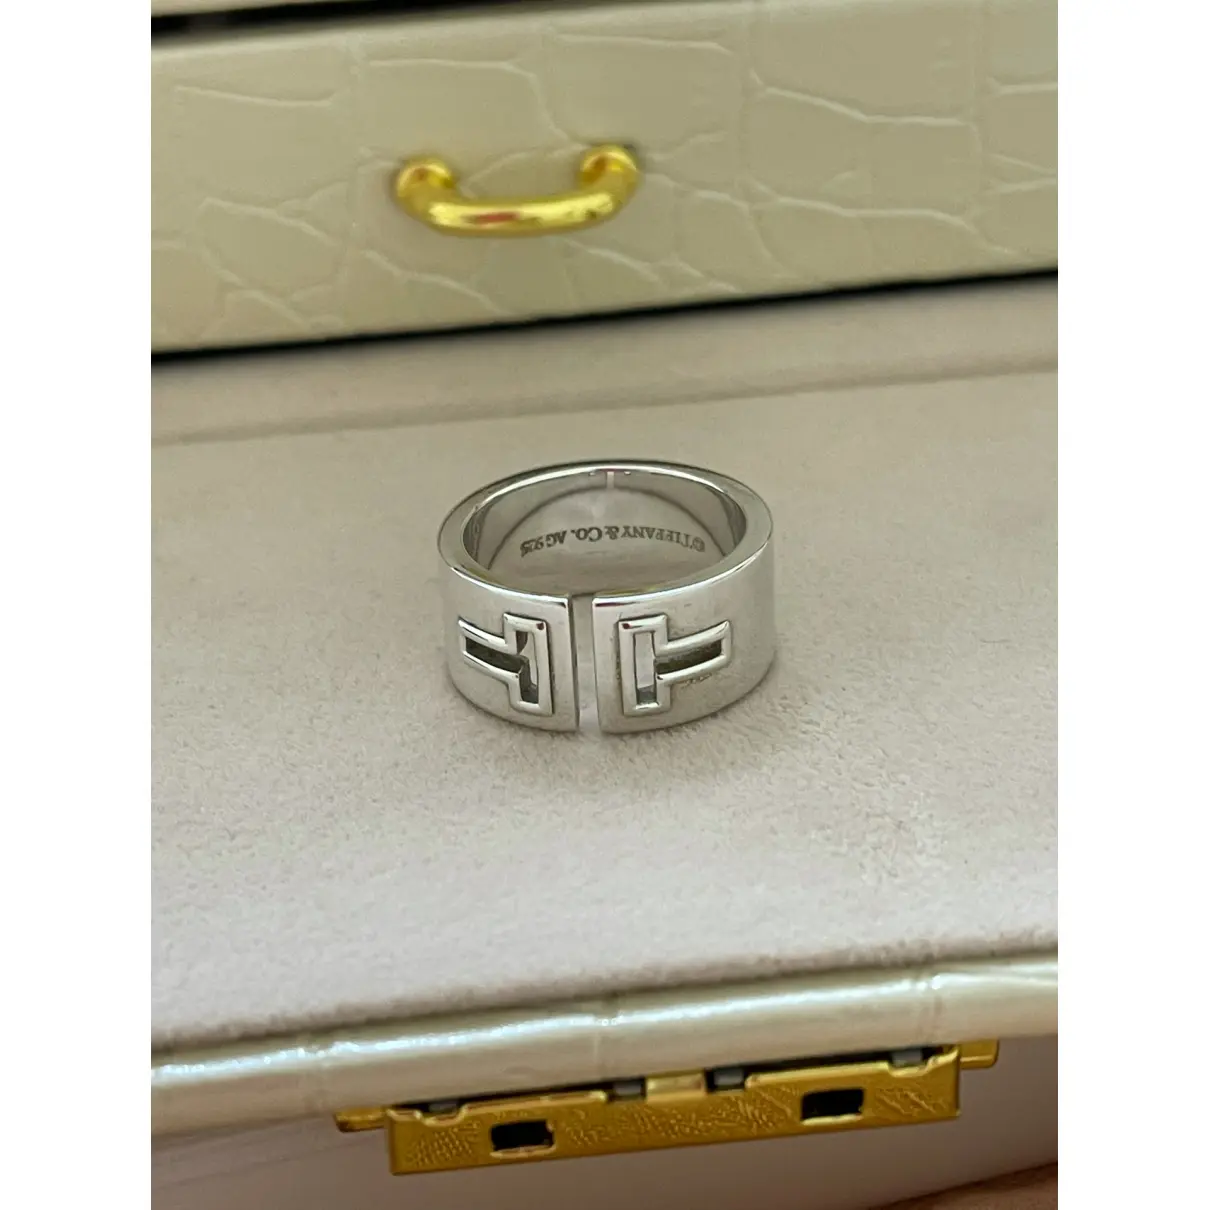 Tiffany T silver ring Tiffany & Co